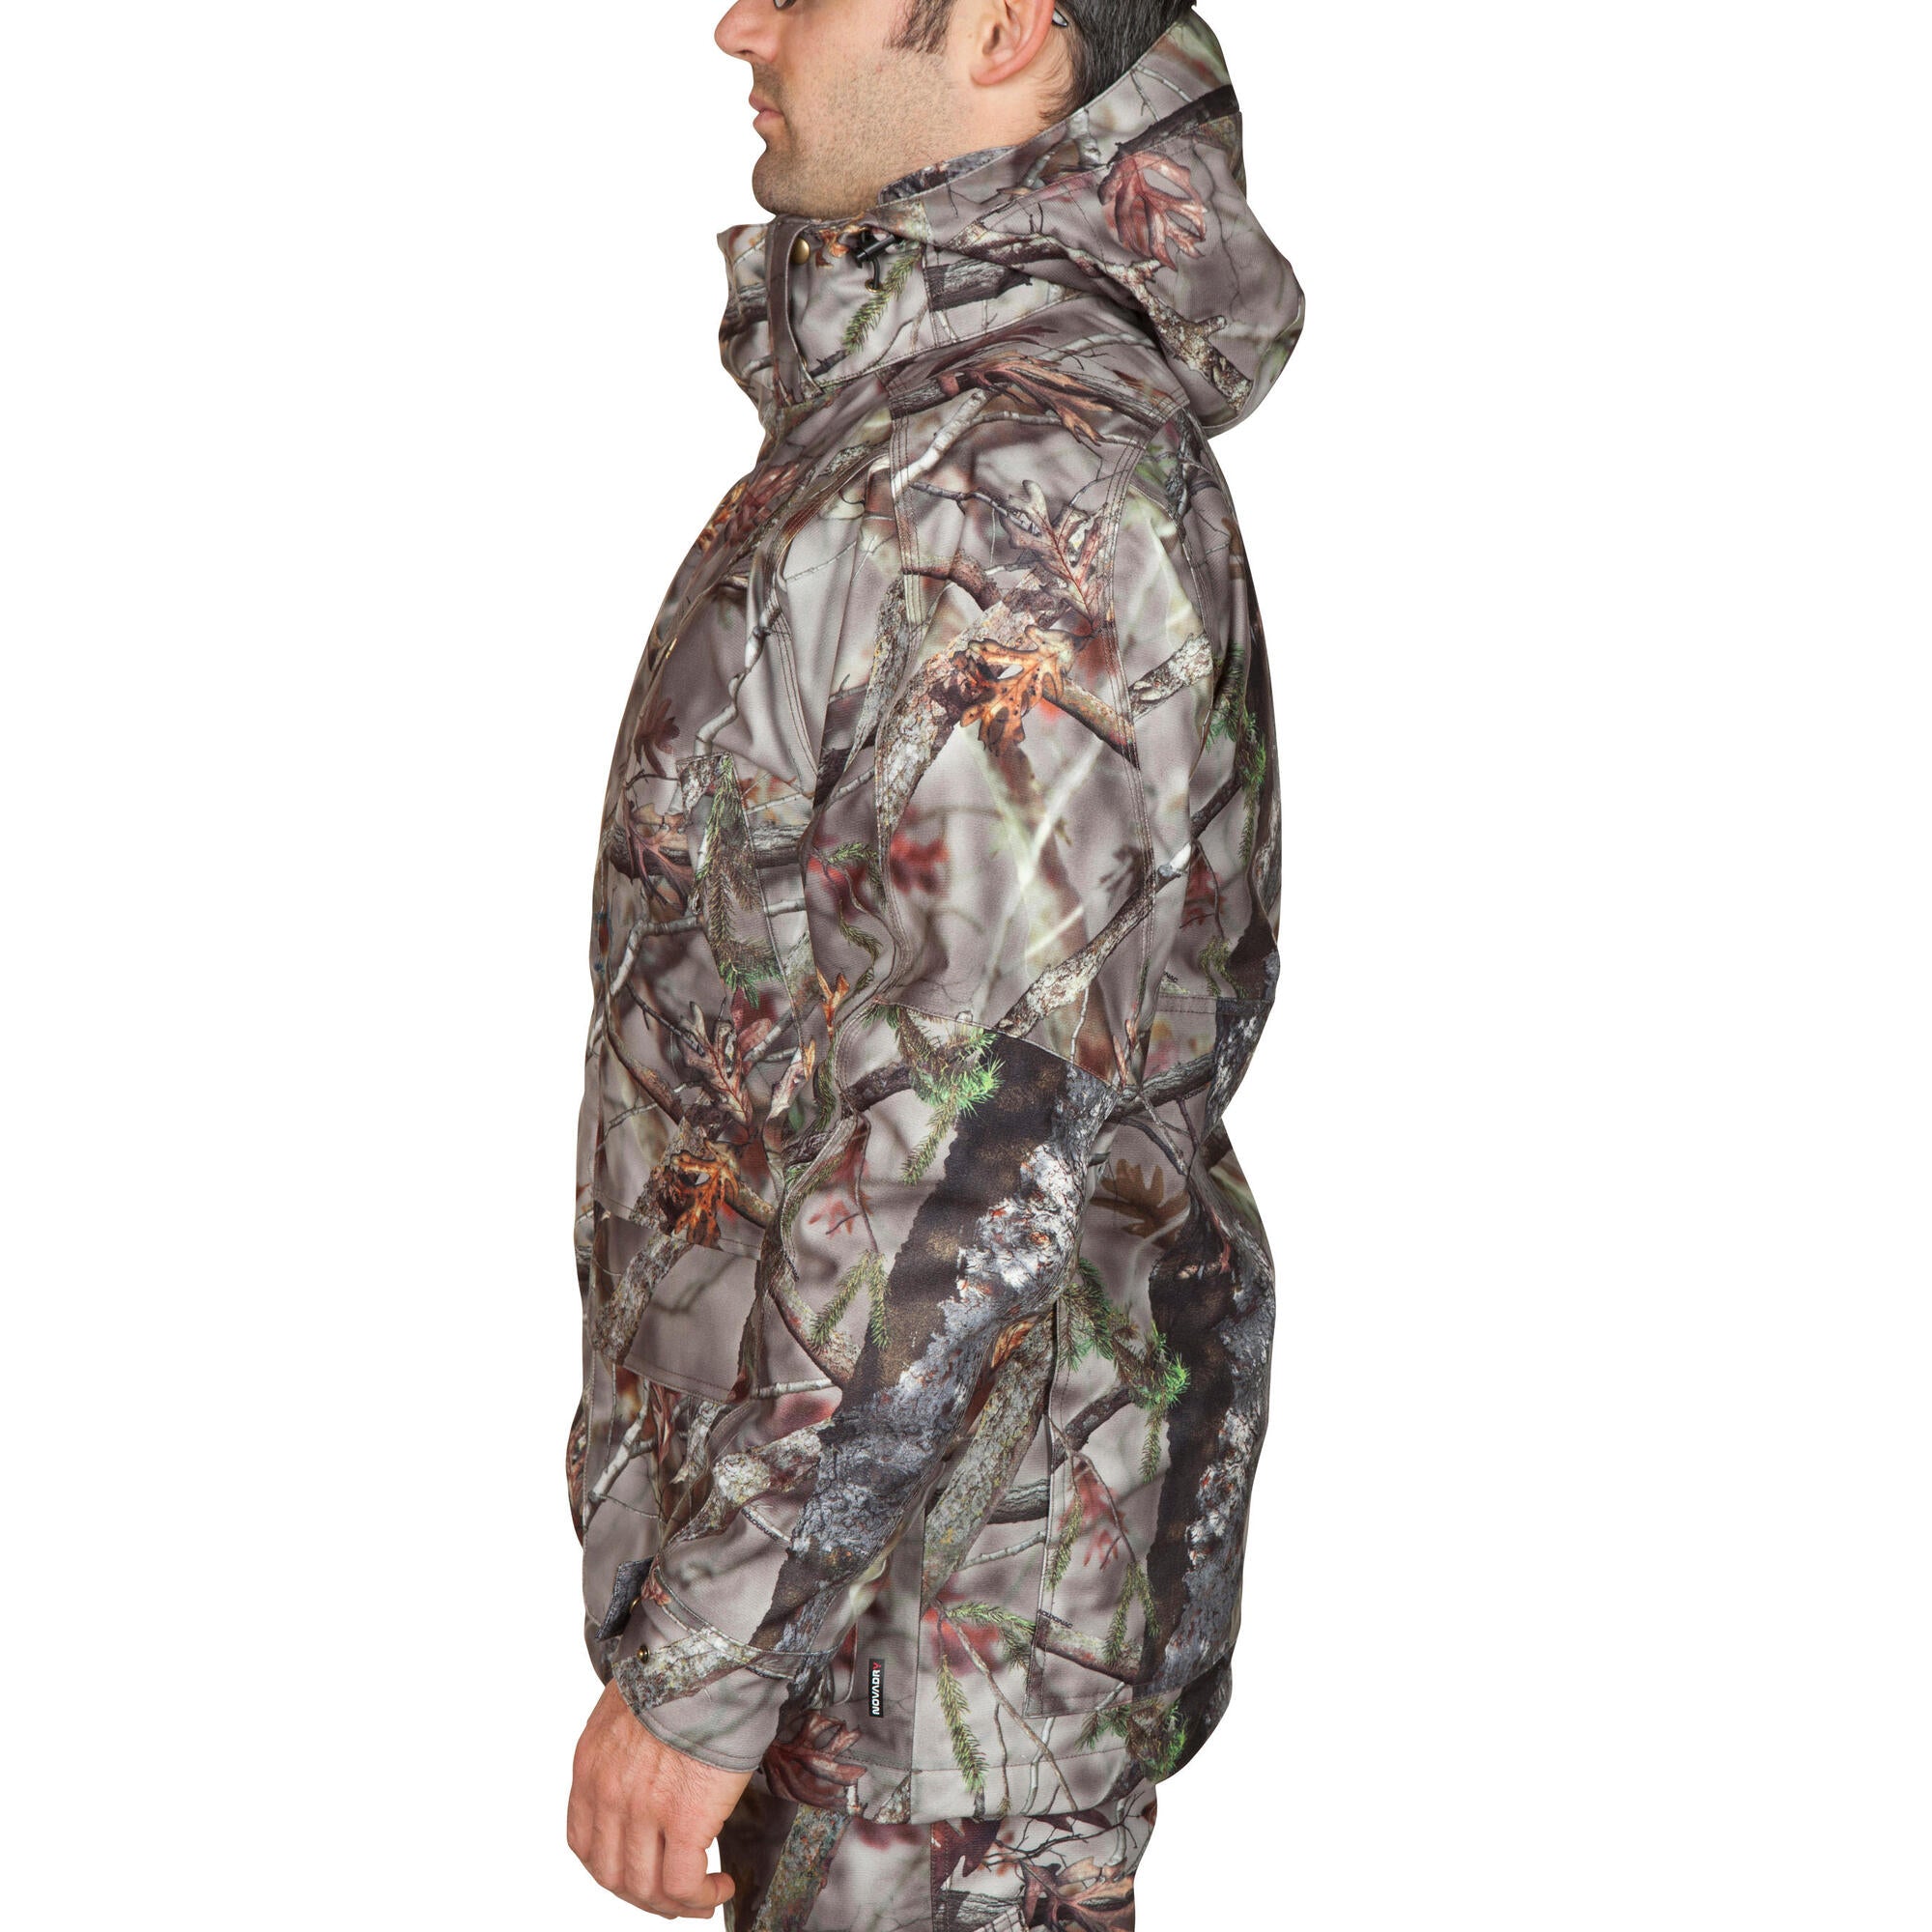 Posikam 300 Waterproof Camouflage Hunting Parka Adult